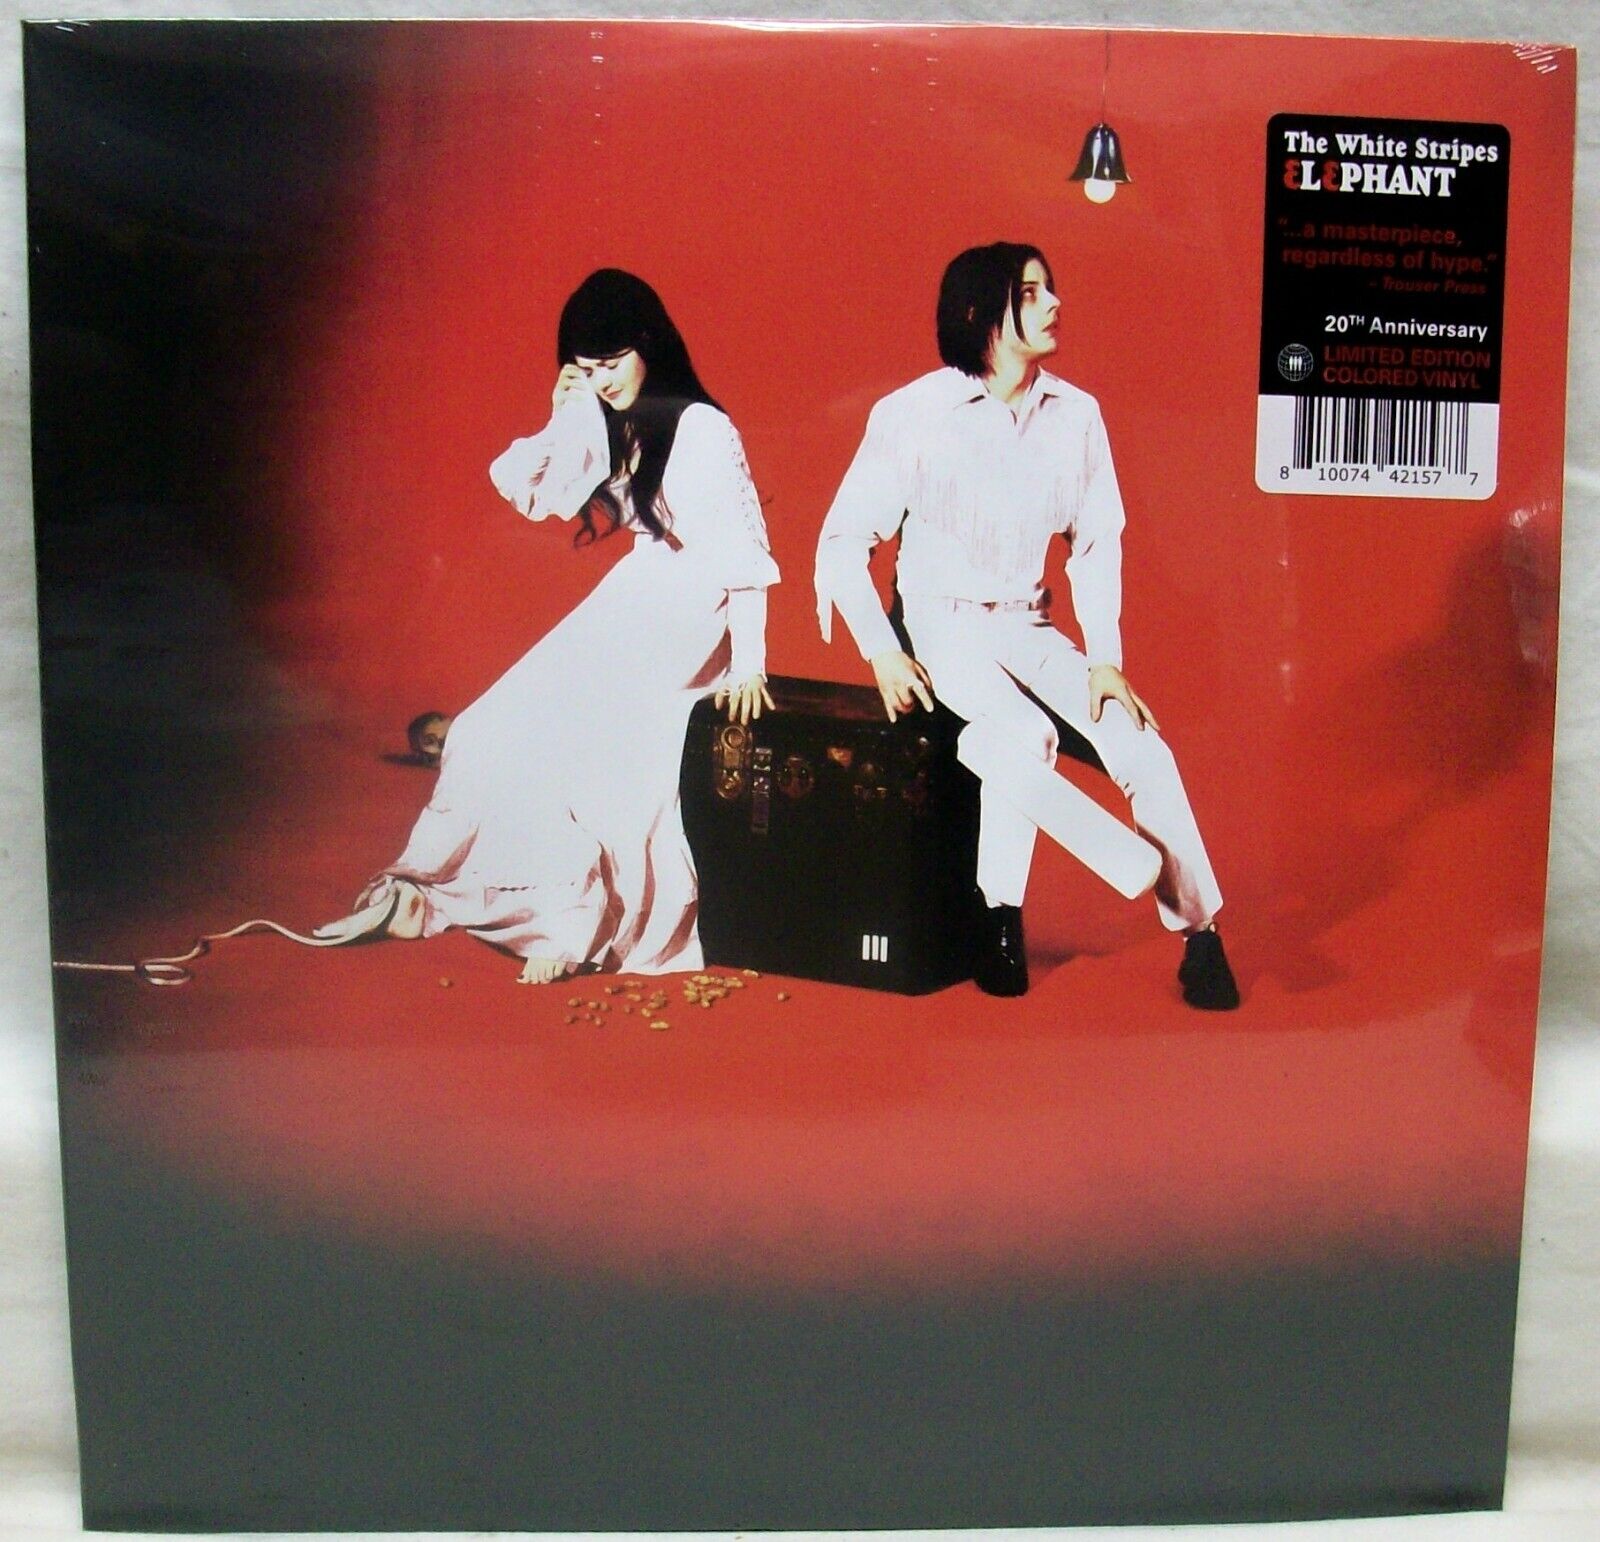 NEW & Sealed White Stripes "Elephant" 2-LP Color Vinyl Records (TMR200) 20th Anv